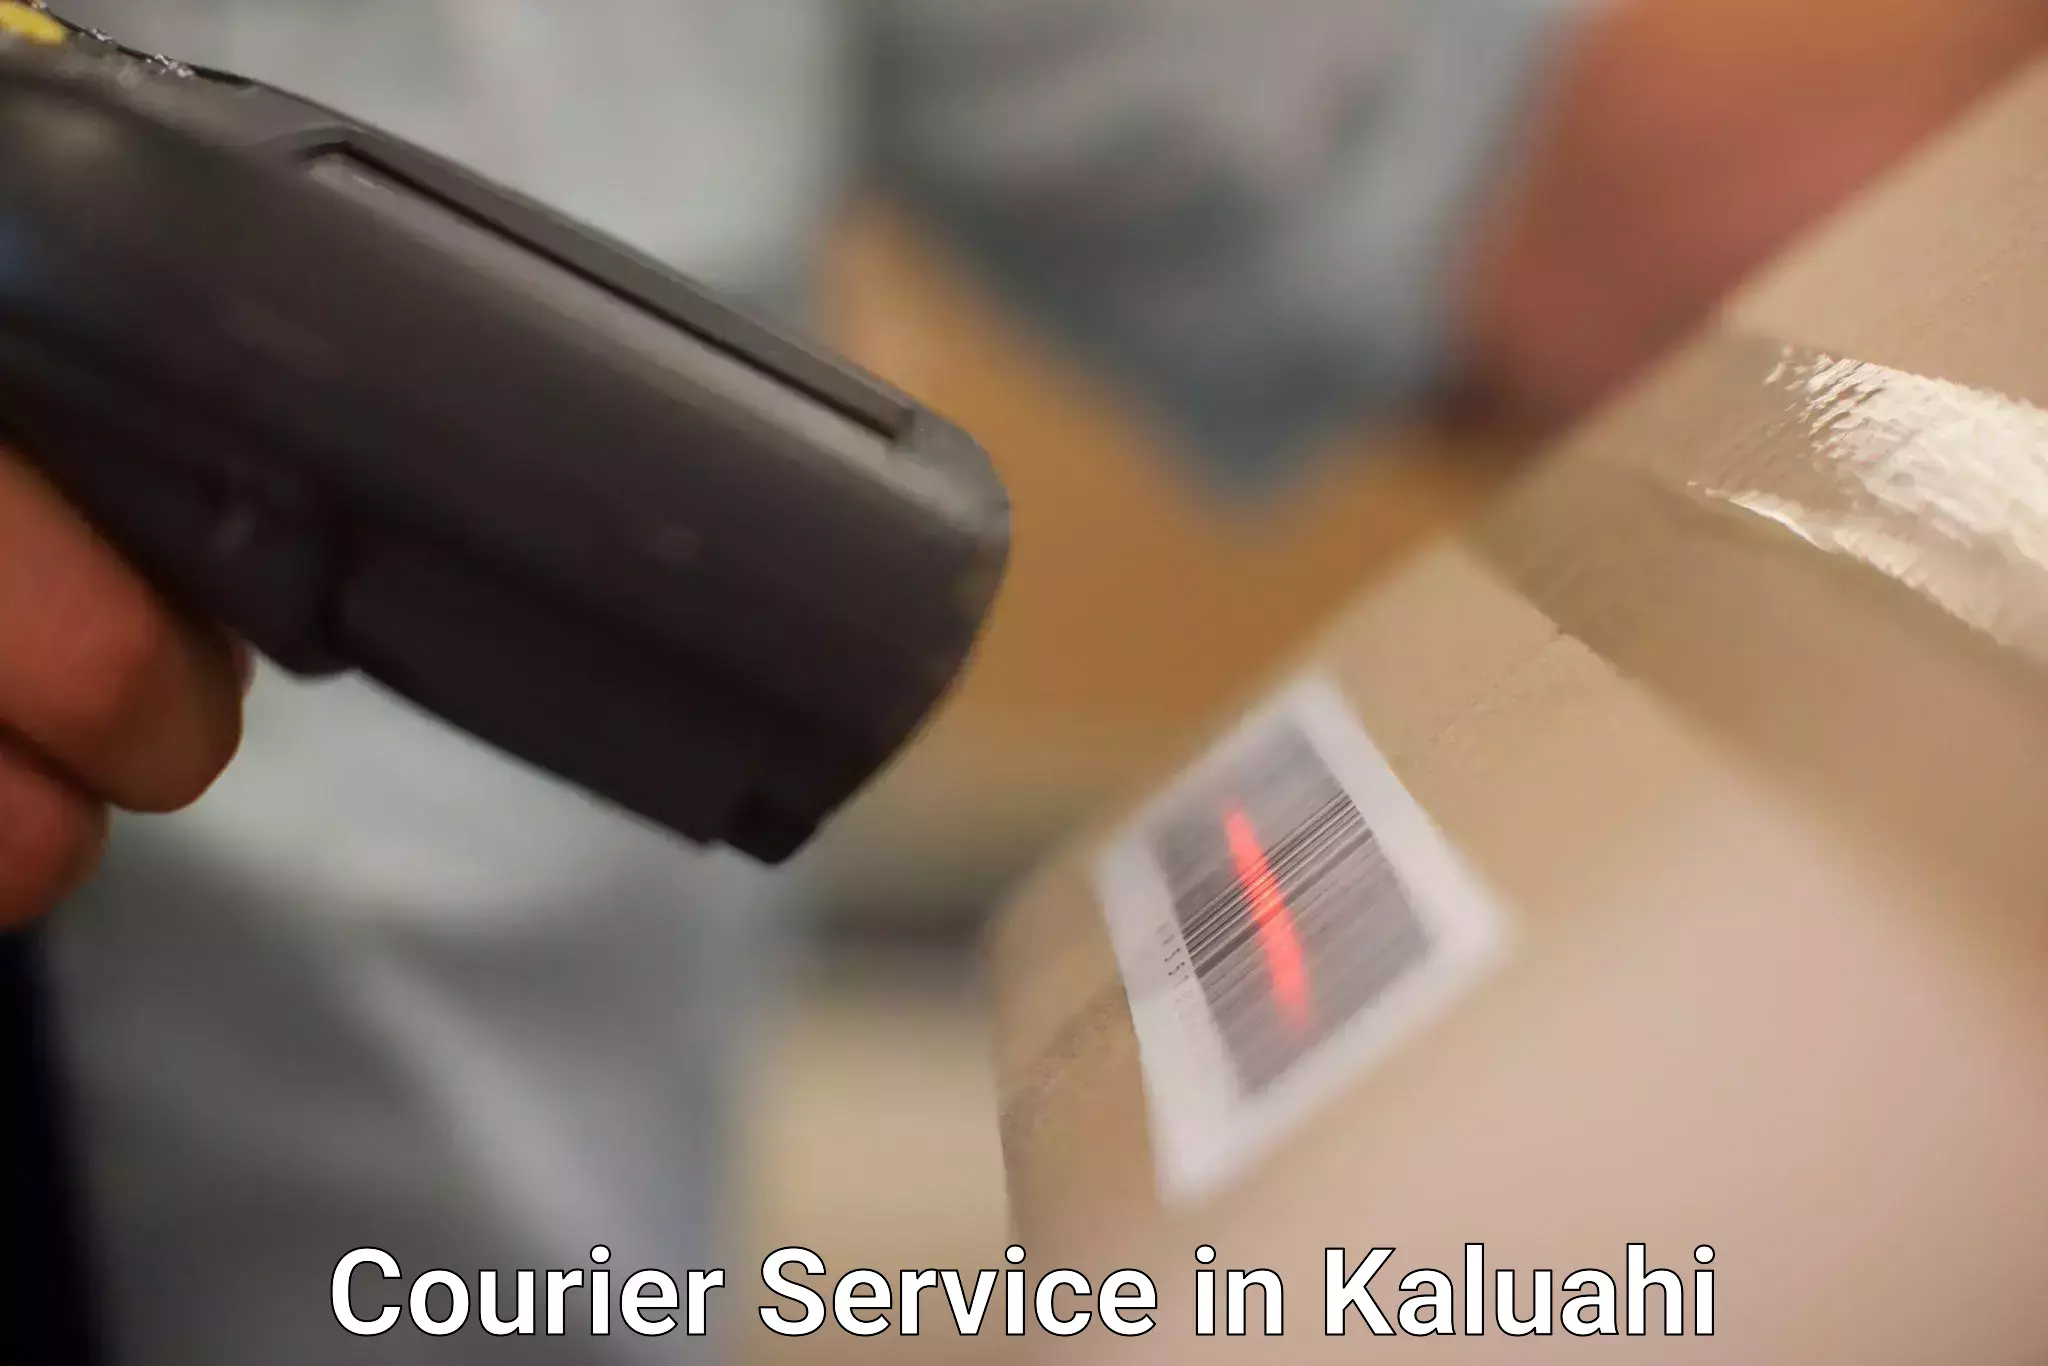 Fragile item shipping in Kaluahi